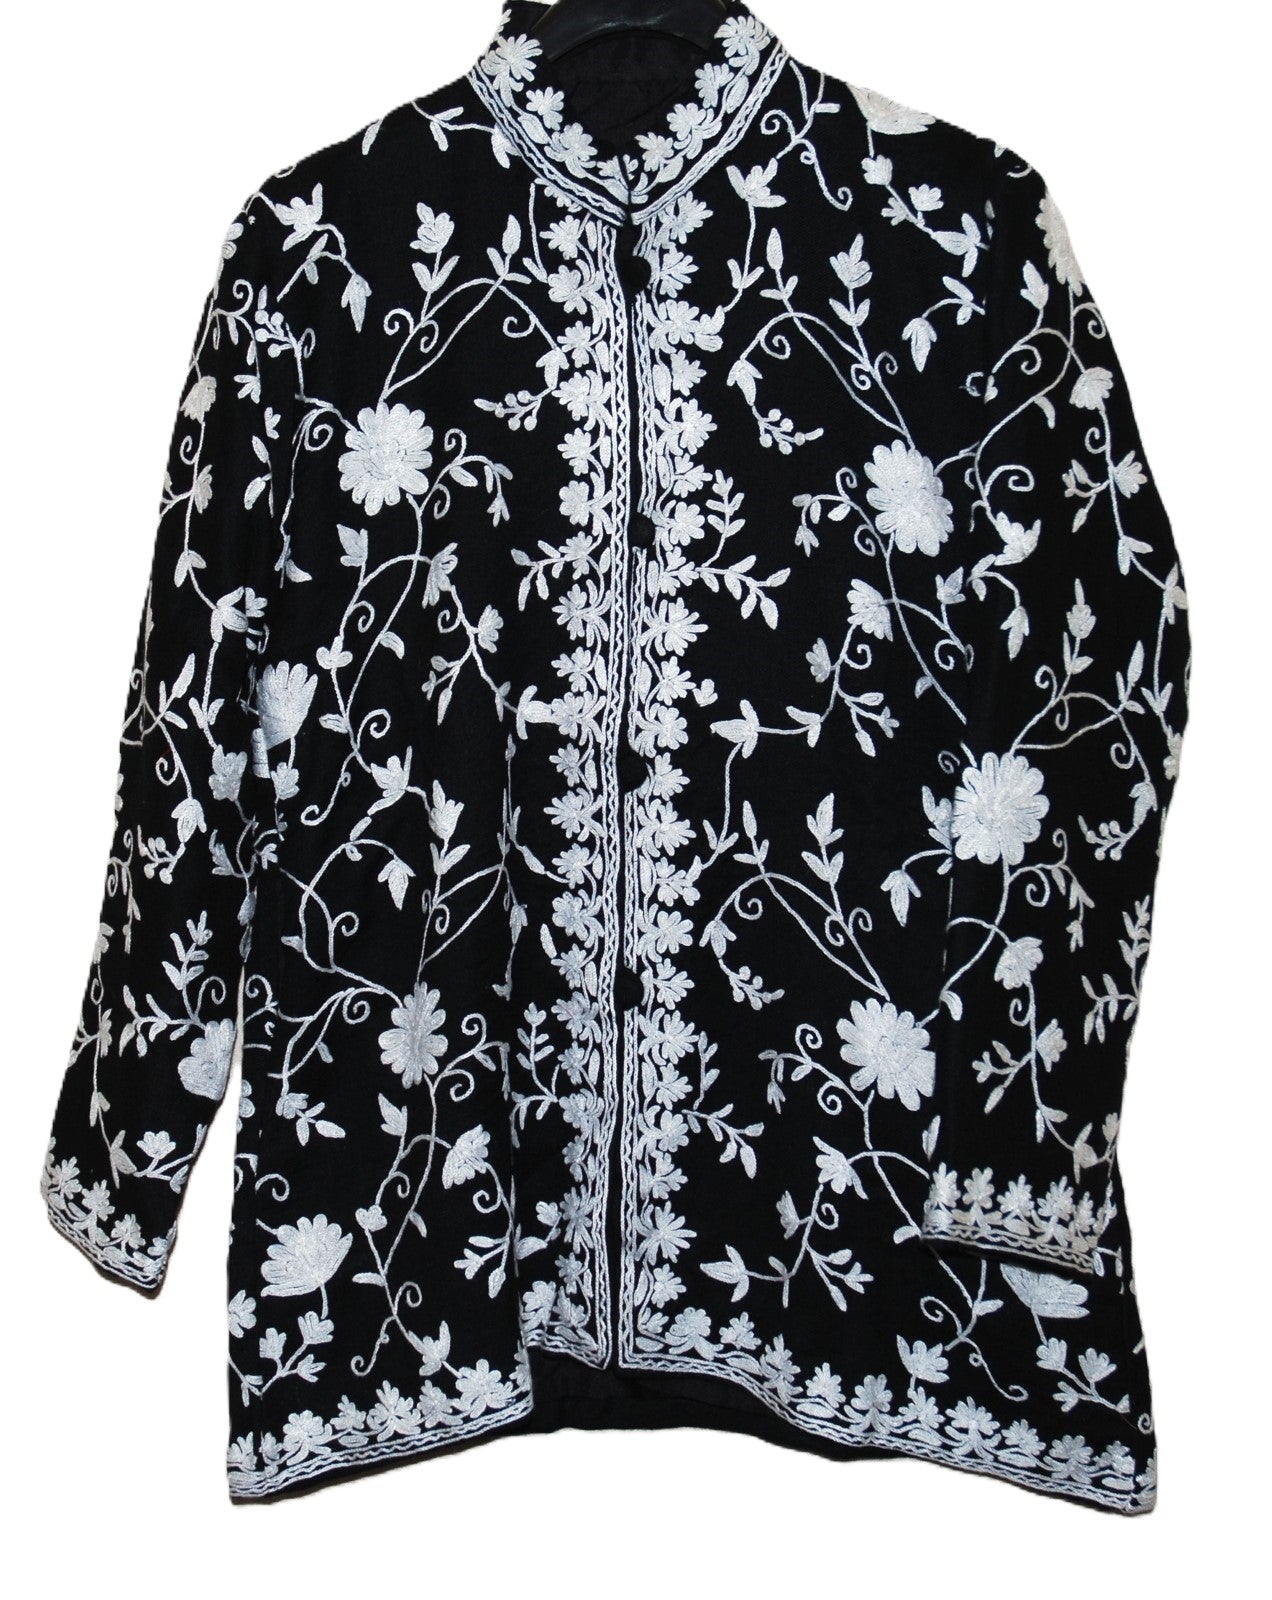 Floral Embroidery Kashmiri Woolen Jacket, White on Black #AO-056